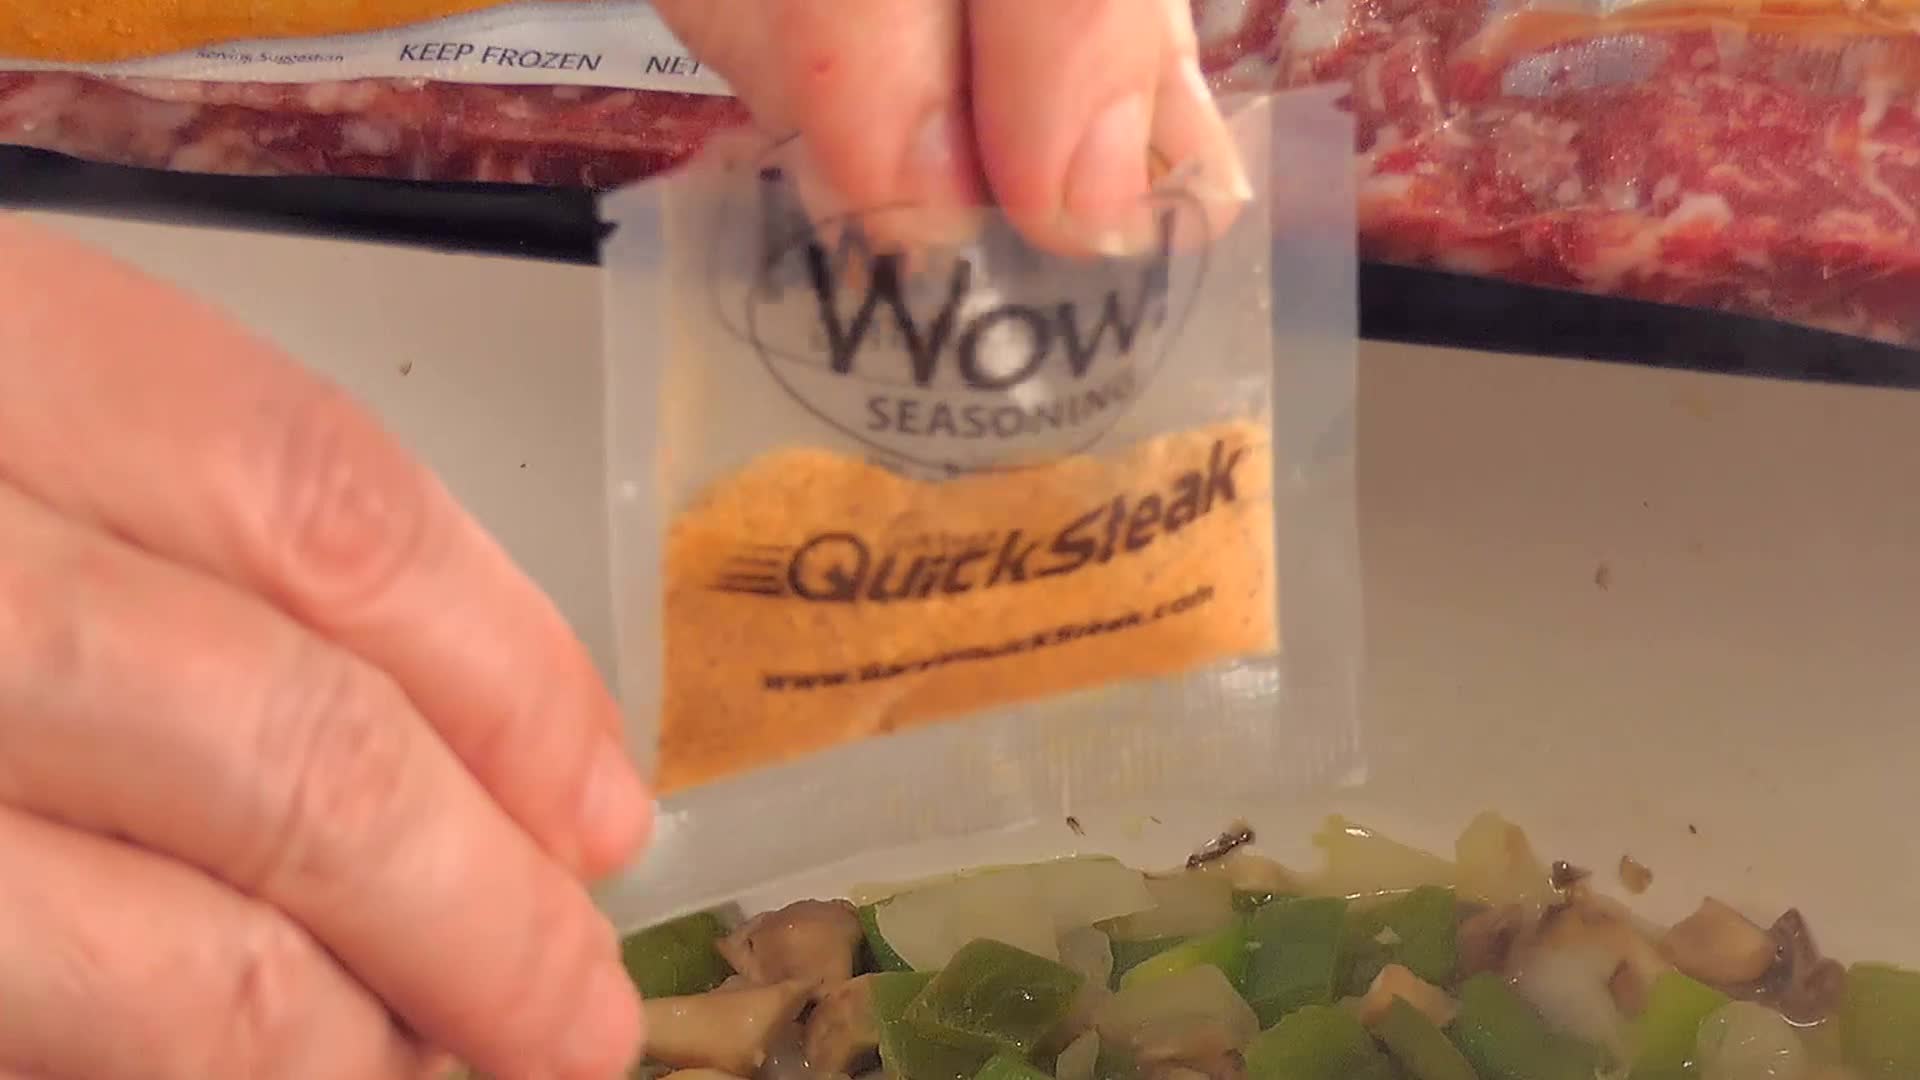  Gary's QuickSteak Wow! Seasoning, Case of 12